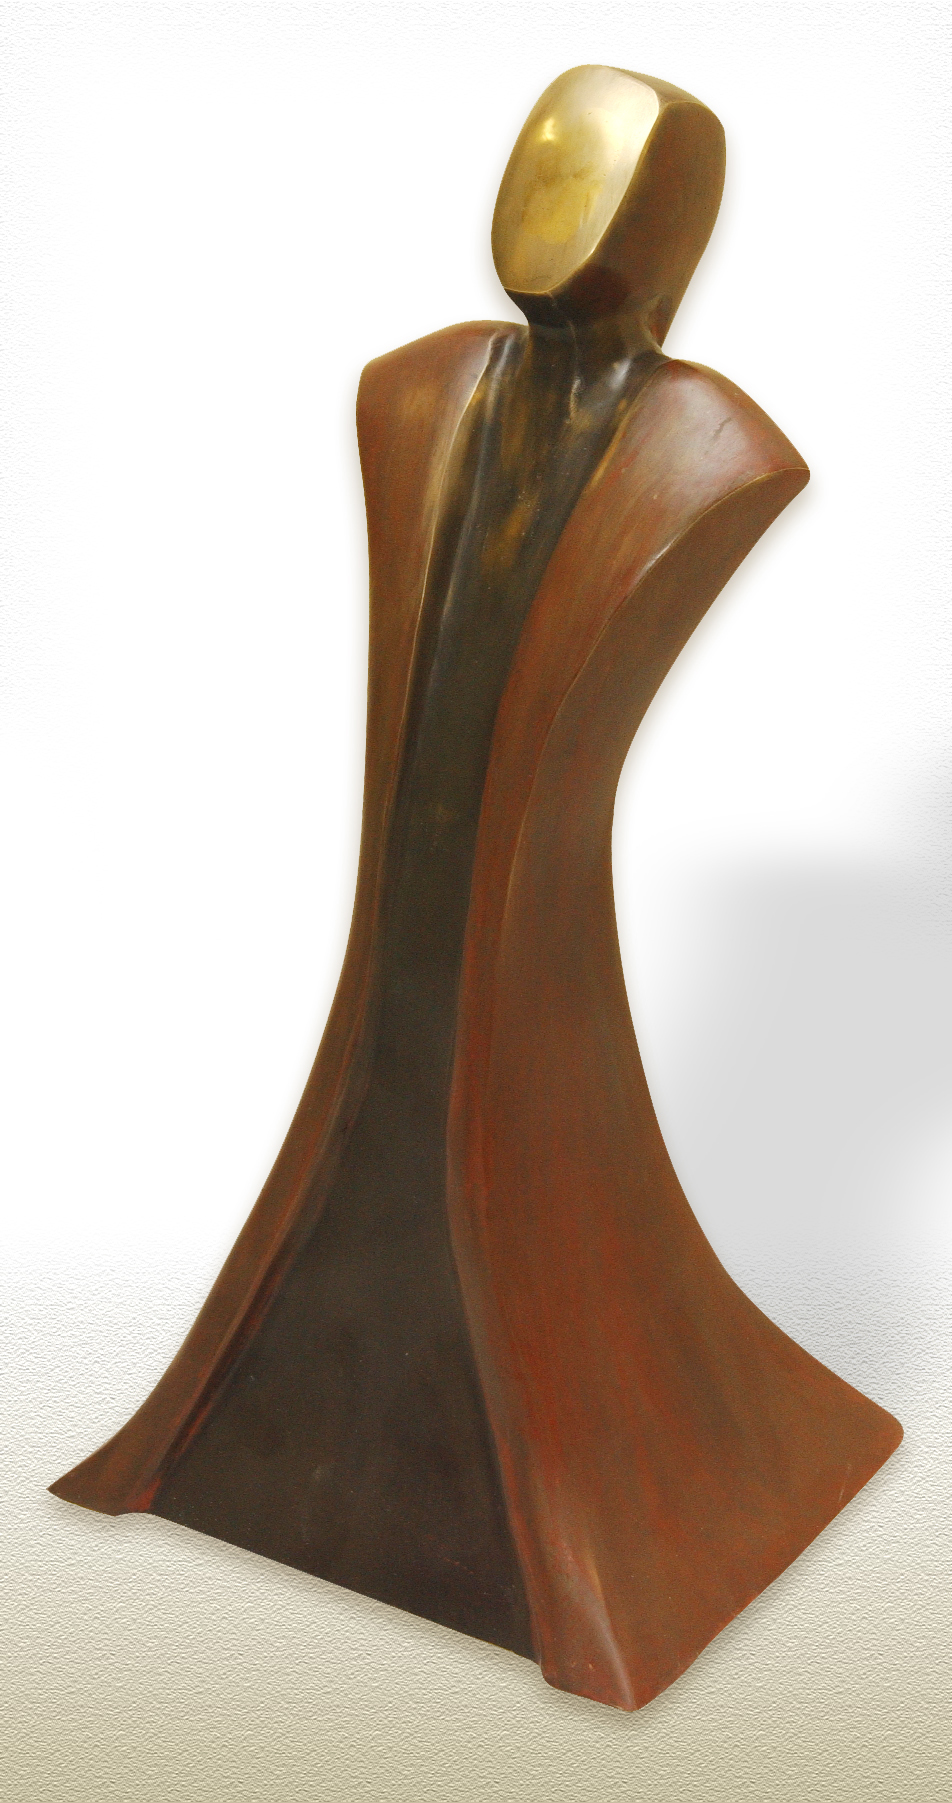 Escultura em bronze Macunama<a style='float:right;color:#ccc' href='https://www3.al.sp.gov.br/repositorio/noticia/hist/Orianamaculet MACUNAIMA.jpg' target=_blank><i class='bi bi-zoom-in'></i> Clique para ver a imagem </a>